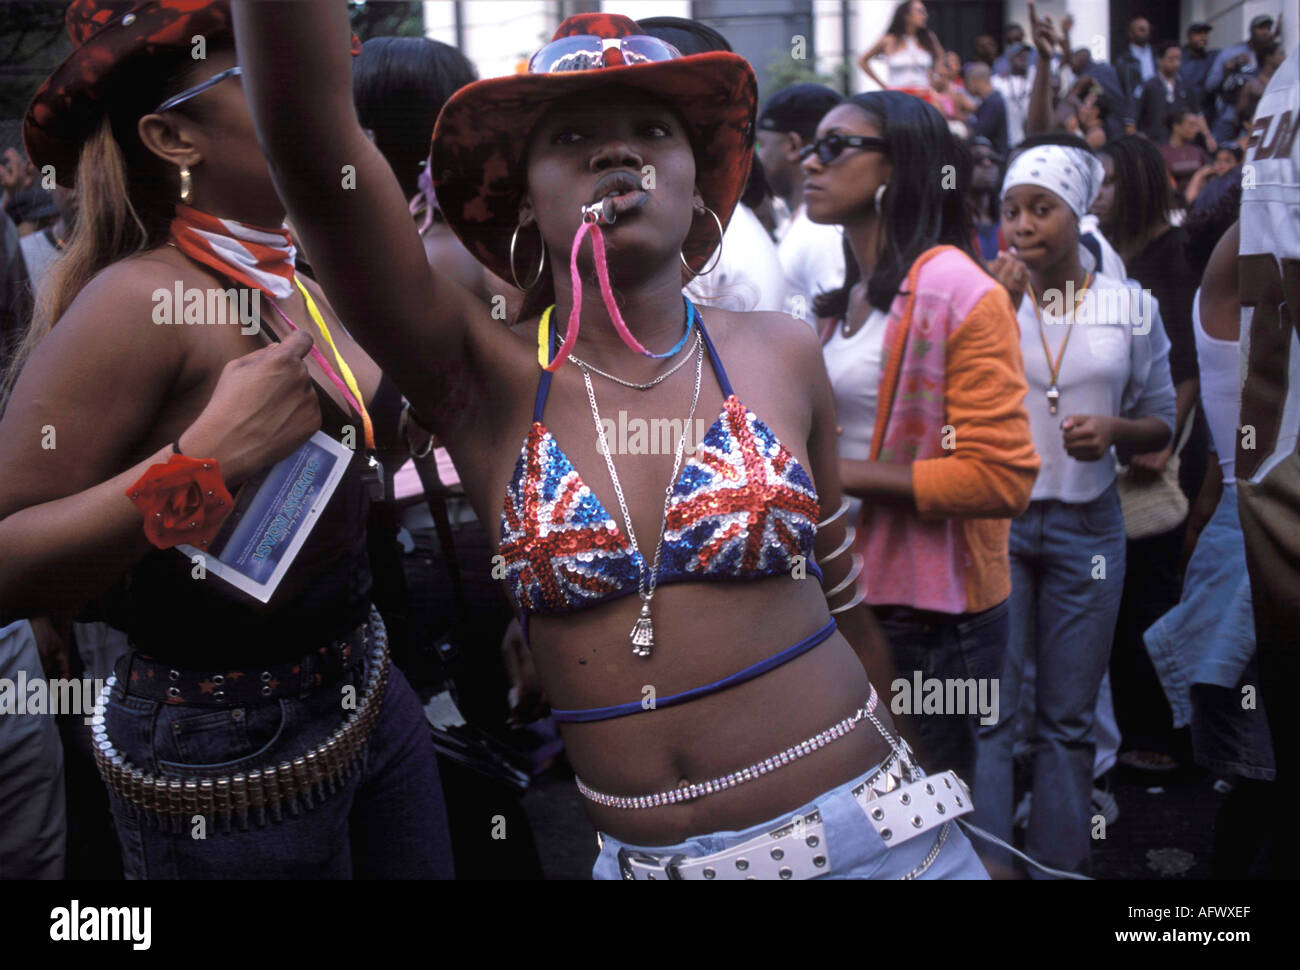 Black British 1990s teen teenager girl wearing Union Jack clothing bikini bra top at the Notting Hill carnival London UK Teenage Identity HOMER SYKES Stock Photo